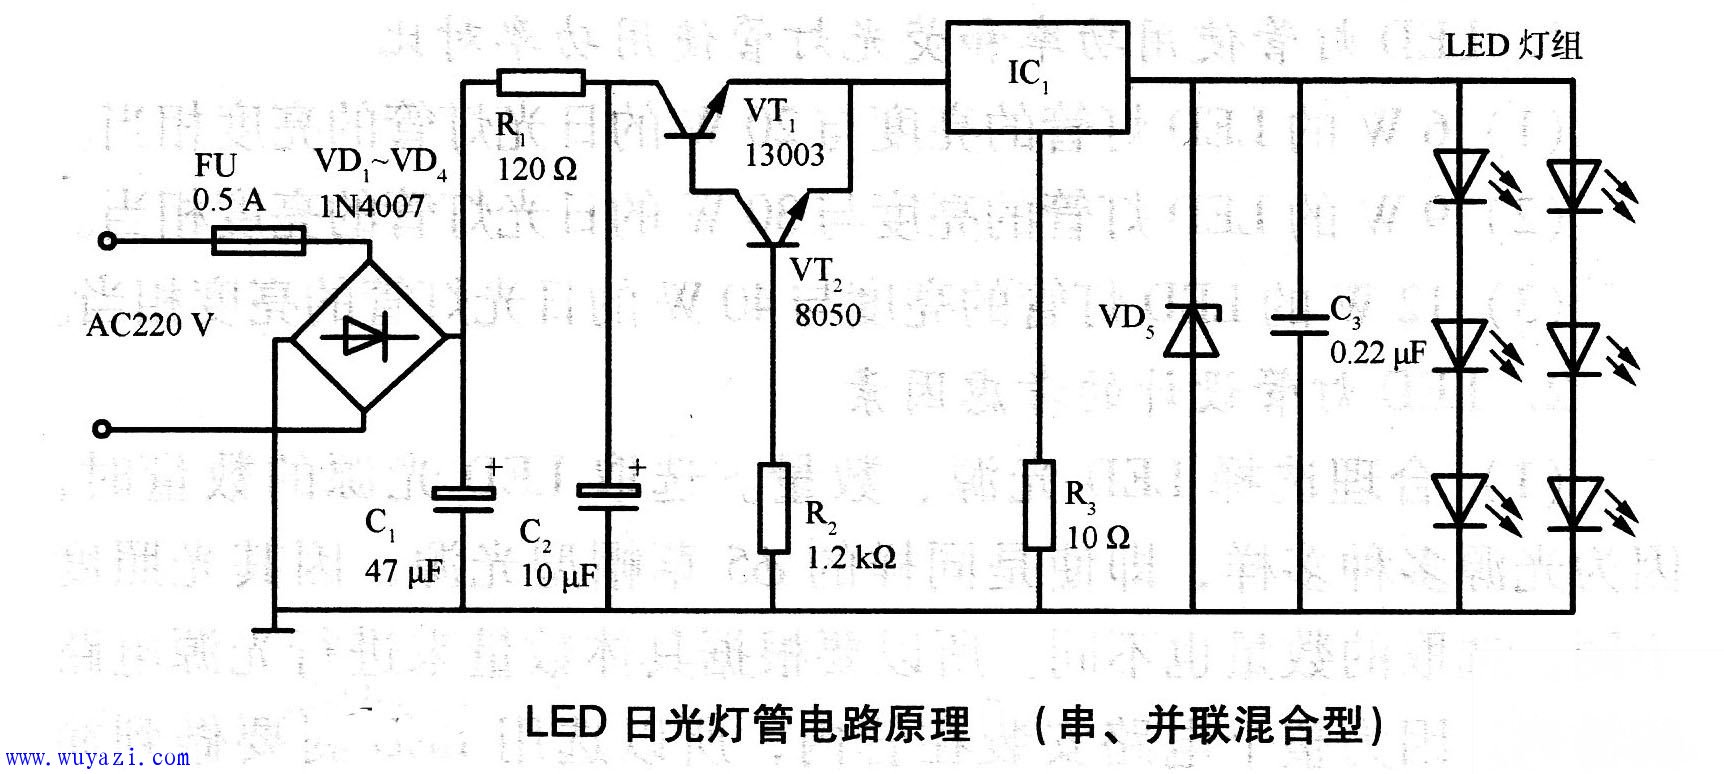 LED日光燈管電路原理圖